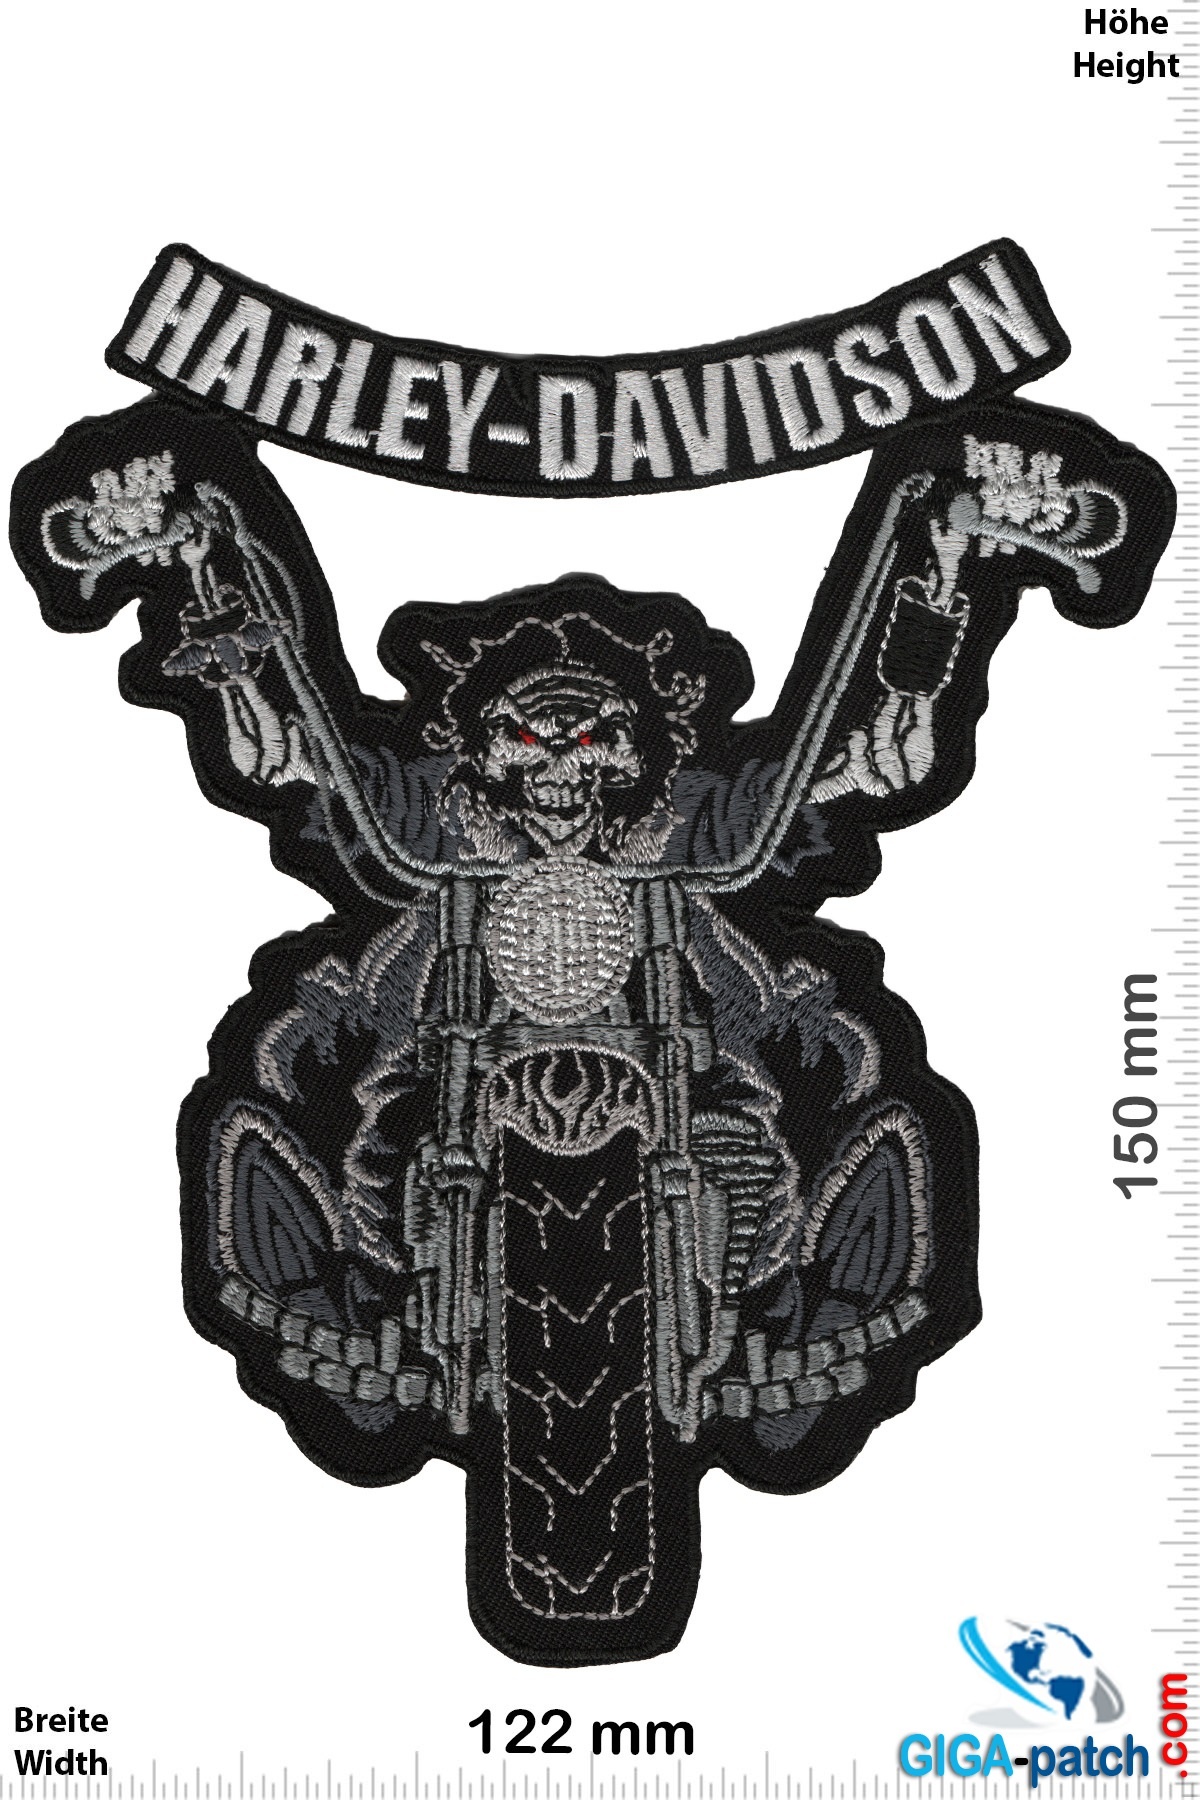 Harley Davidson - Harley Davidson - Ghostrider- Patch - Back